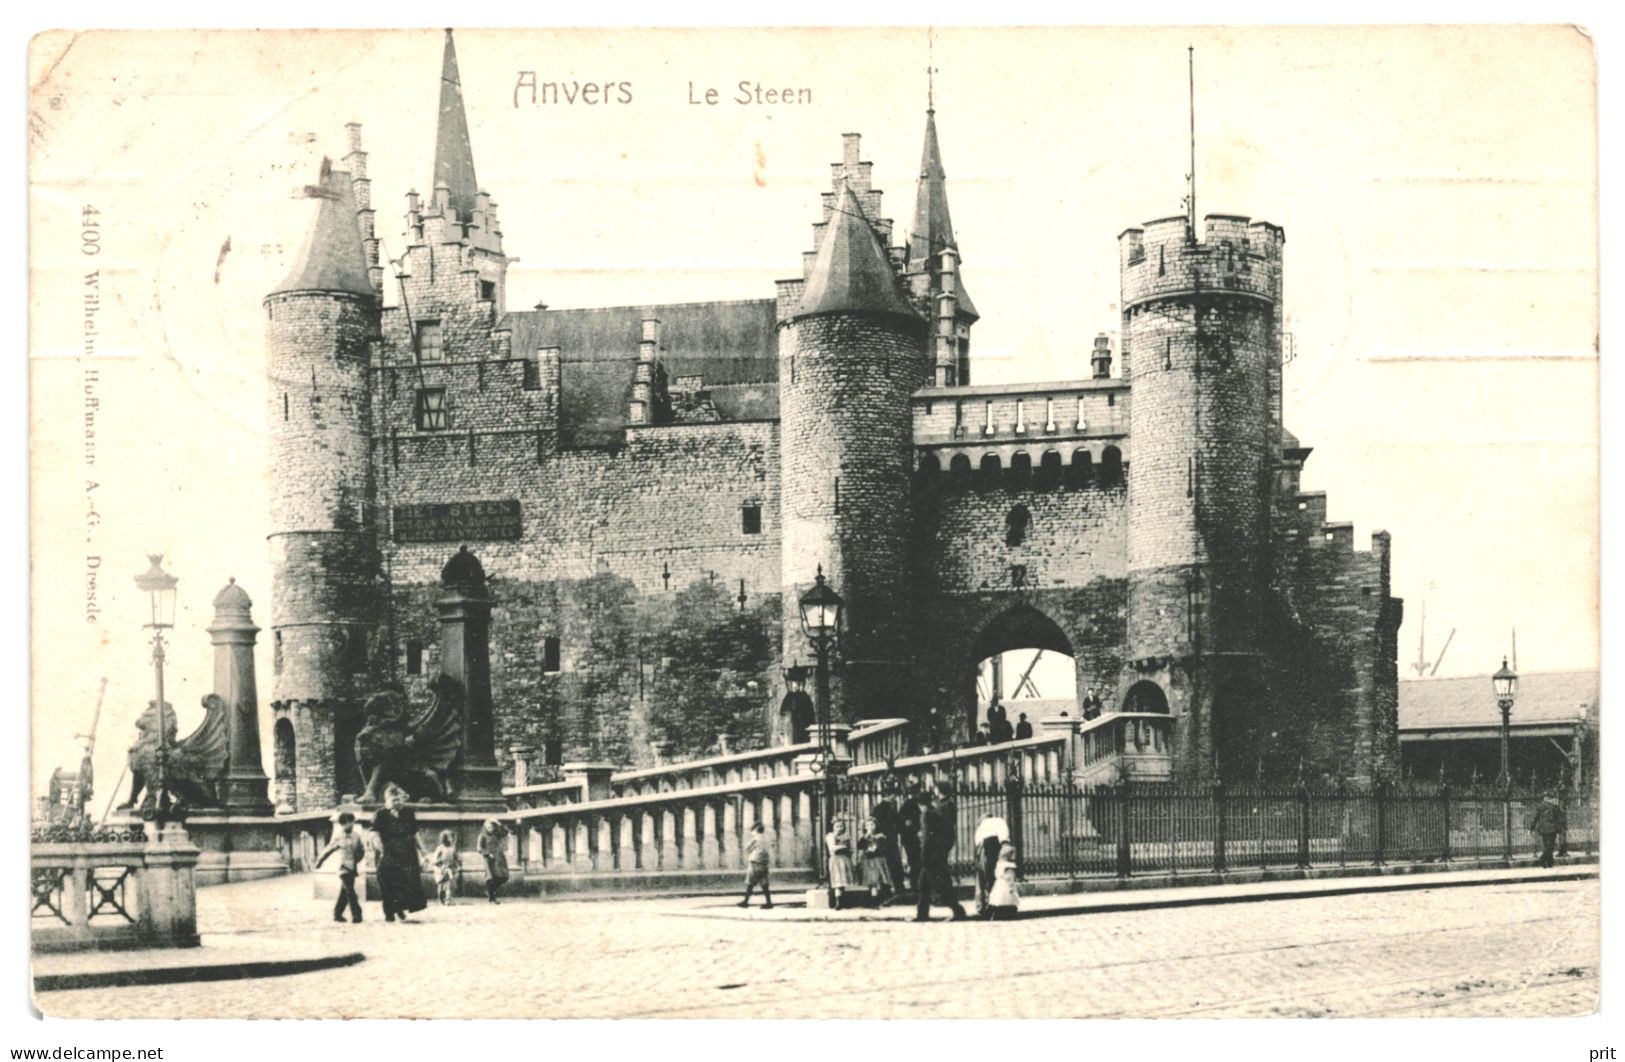 Antwerpen Anvers Le Steen 1910 Used Real Photo Postcard Sent To Riga Latvia Imperial Russia. Publ: Wilhelm Hoffmann - Antwerpen